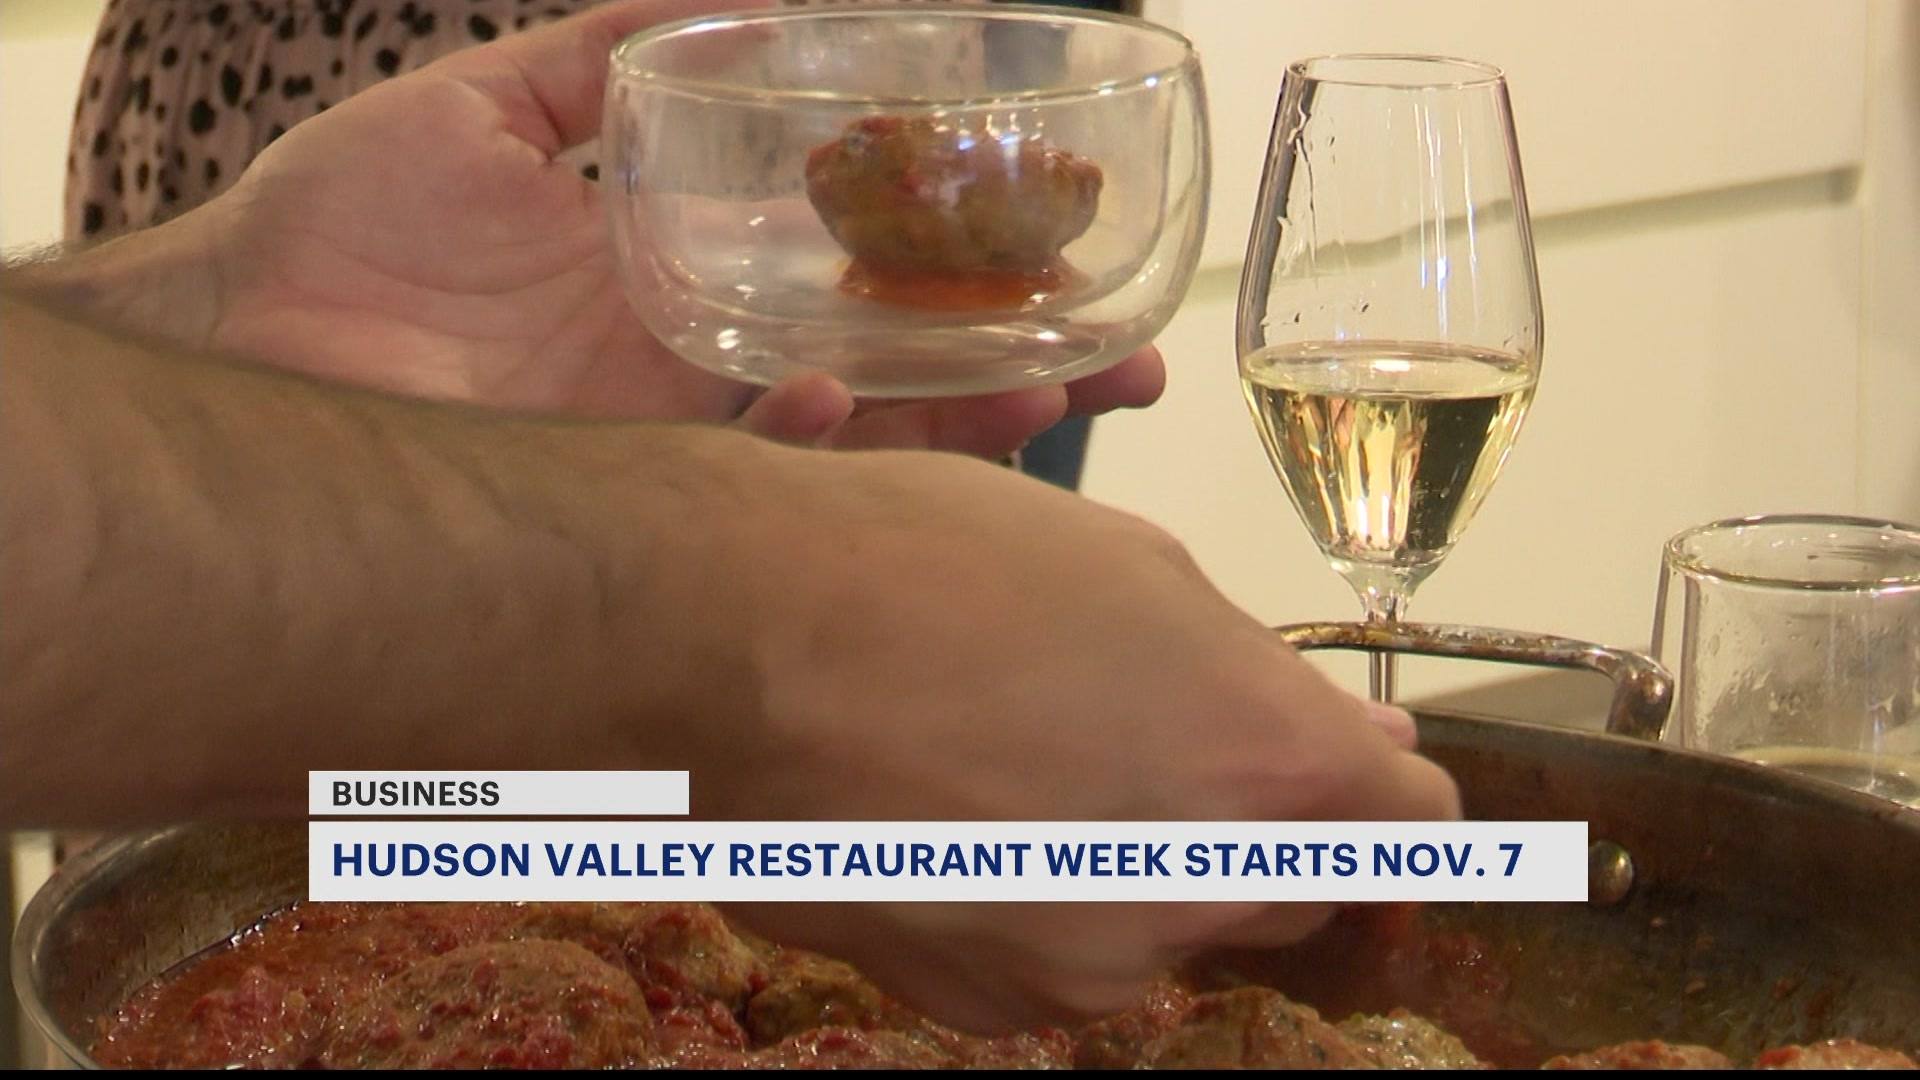 Hudson Valley Restaurant Week to kick off next week with dinner deals